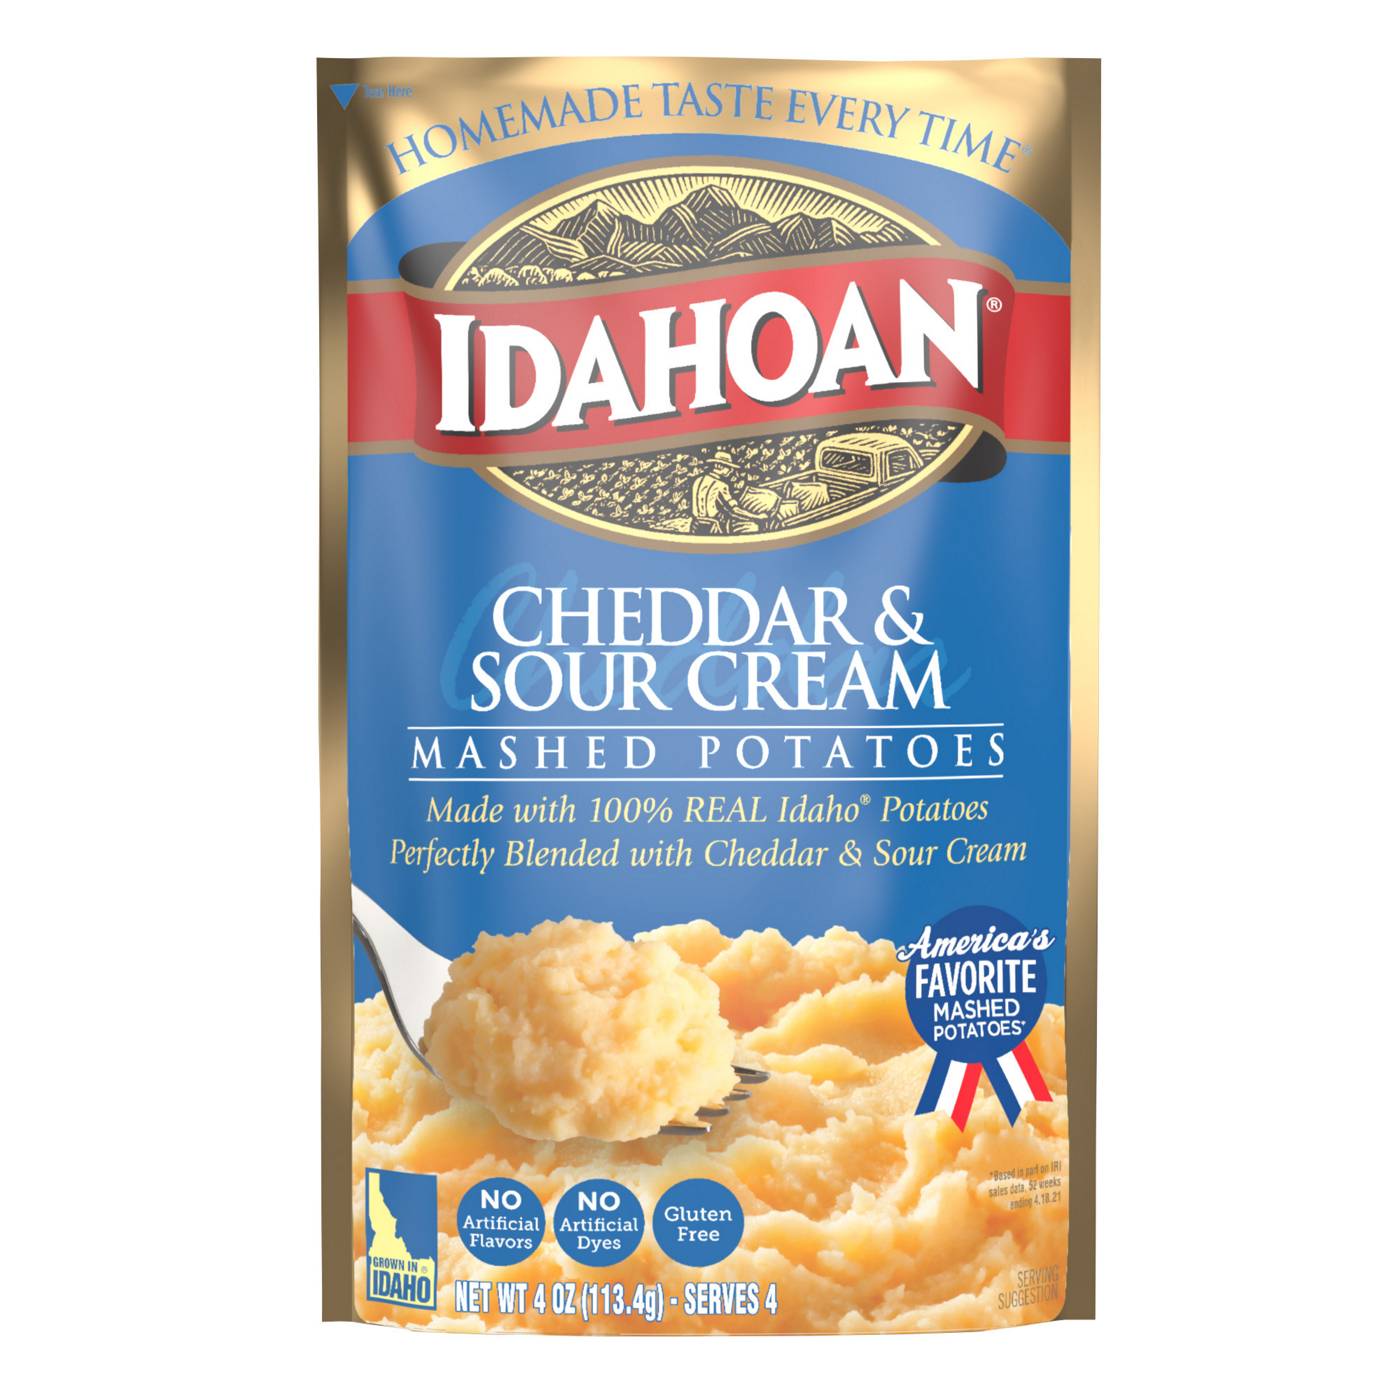 Idahoan Cheddar & Sour Cream Mashed Potatoes; image 1 of 4